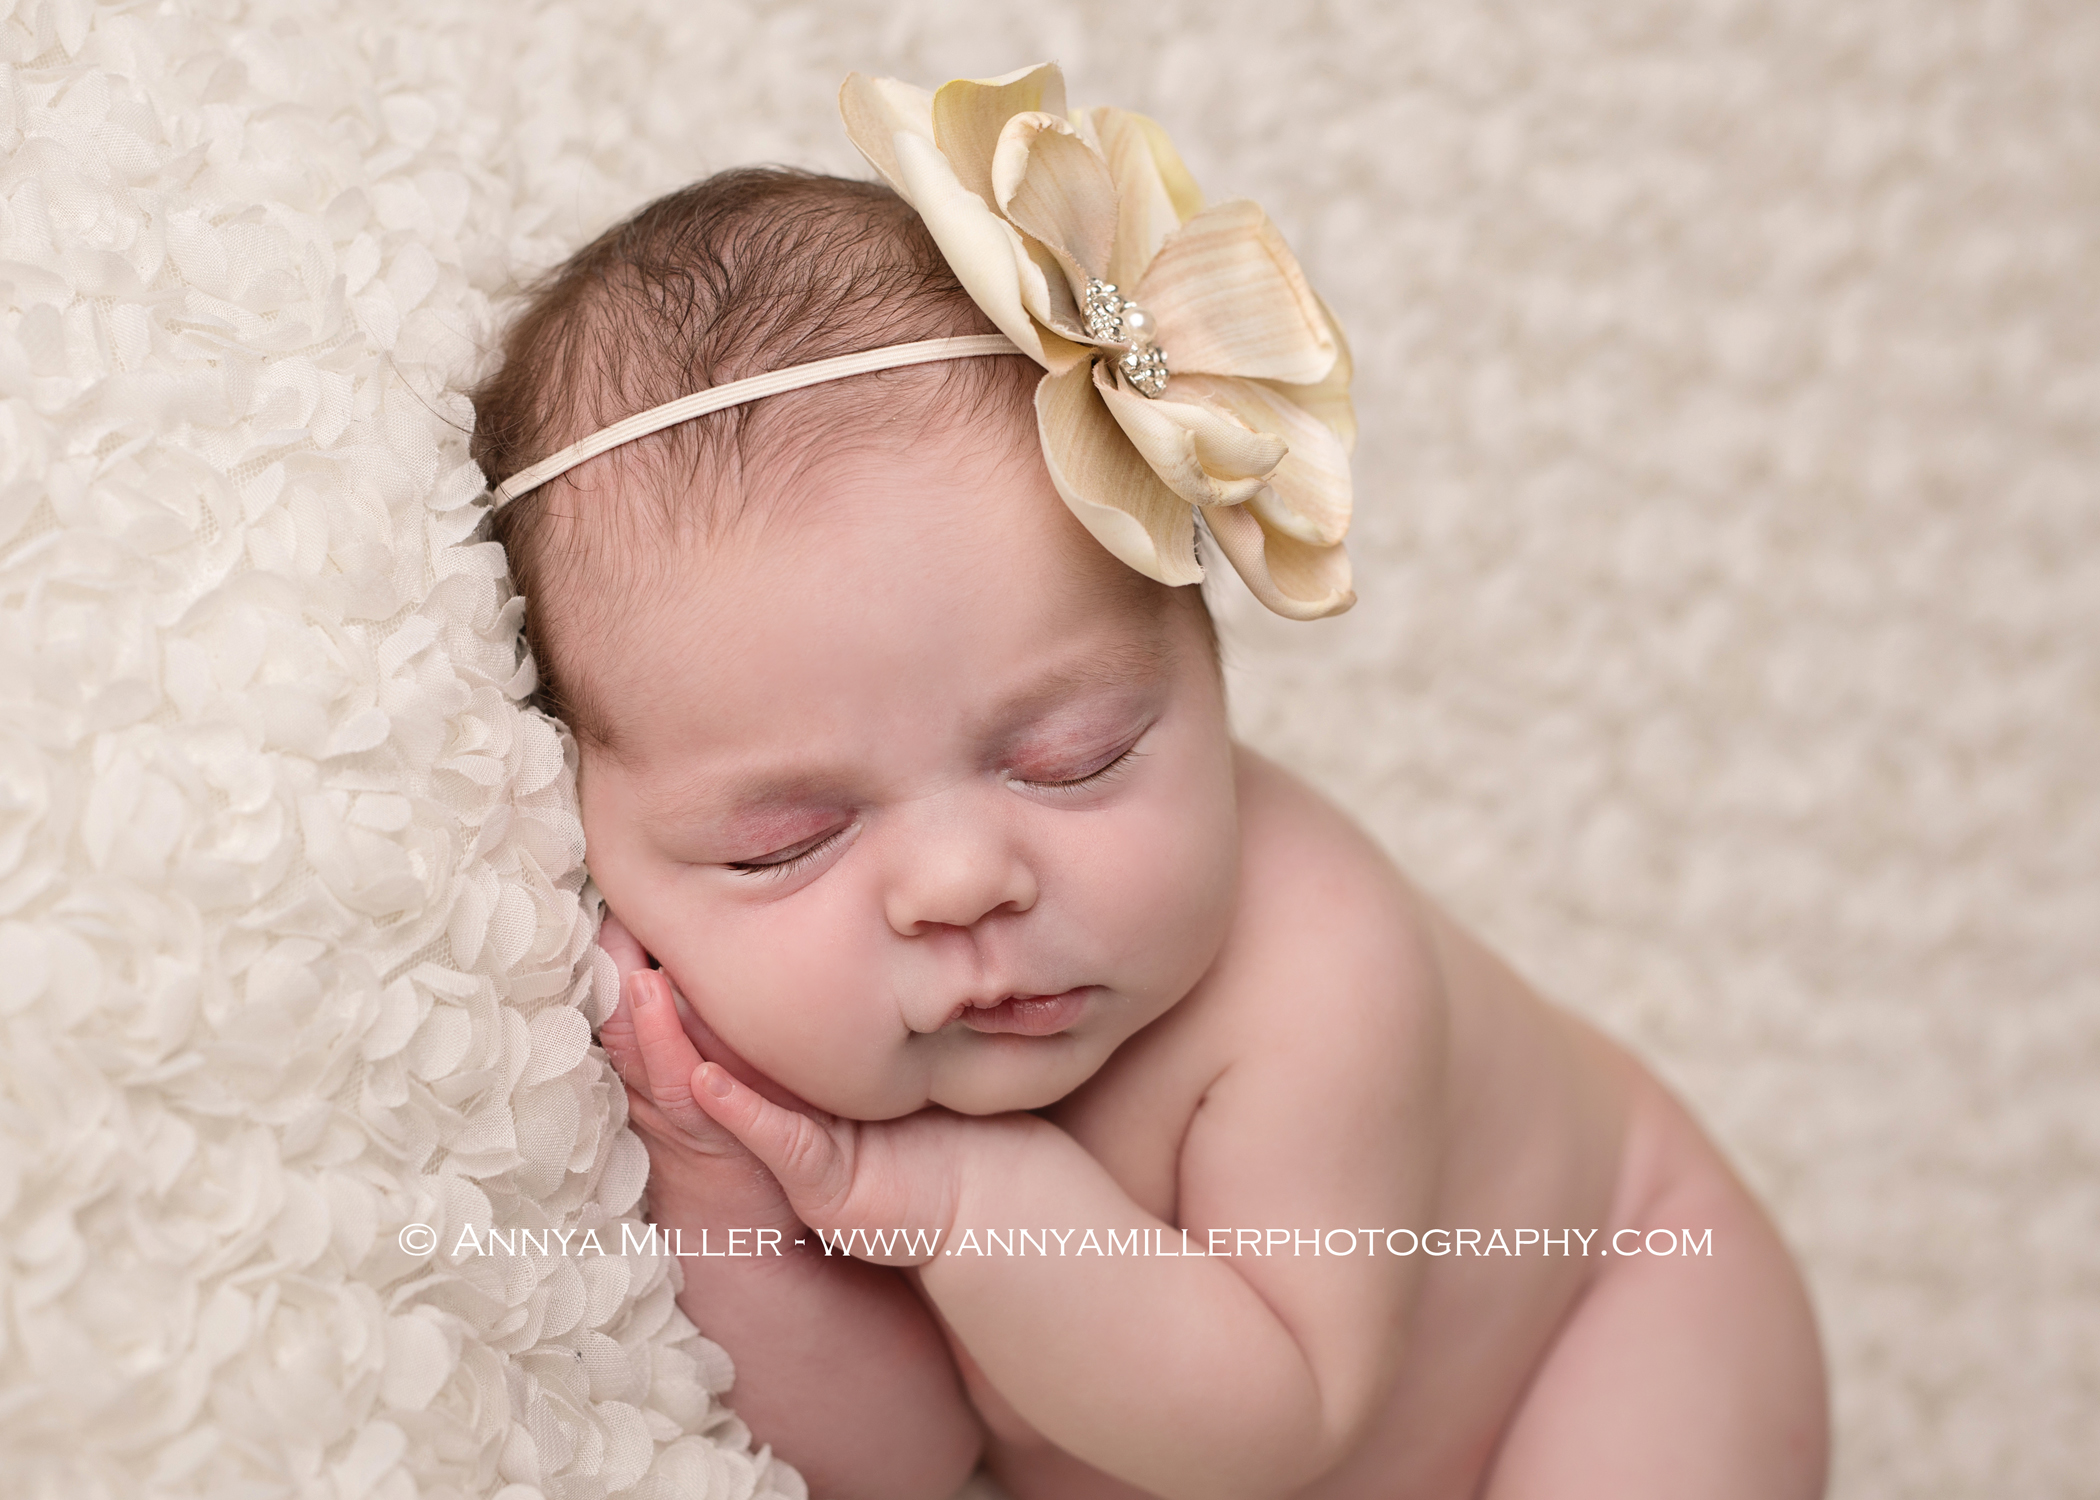 Newborn portrait of baby girl on white backdrop by Toronto newborn photographer Annya Miller